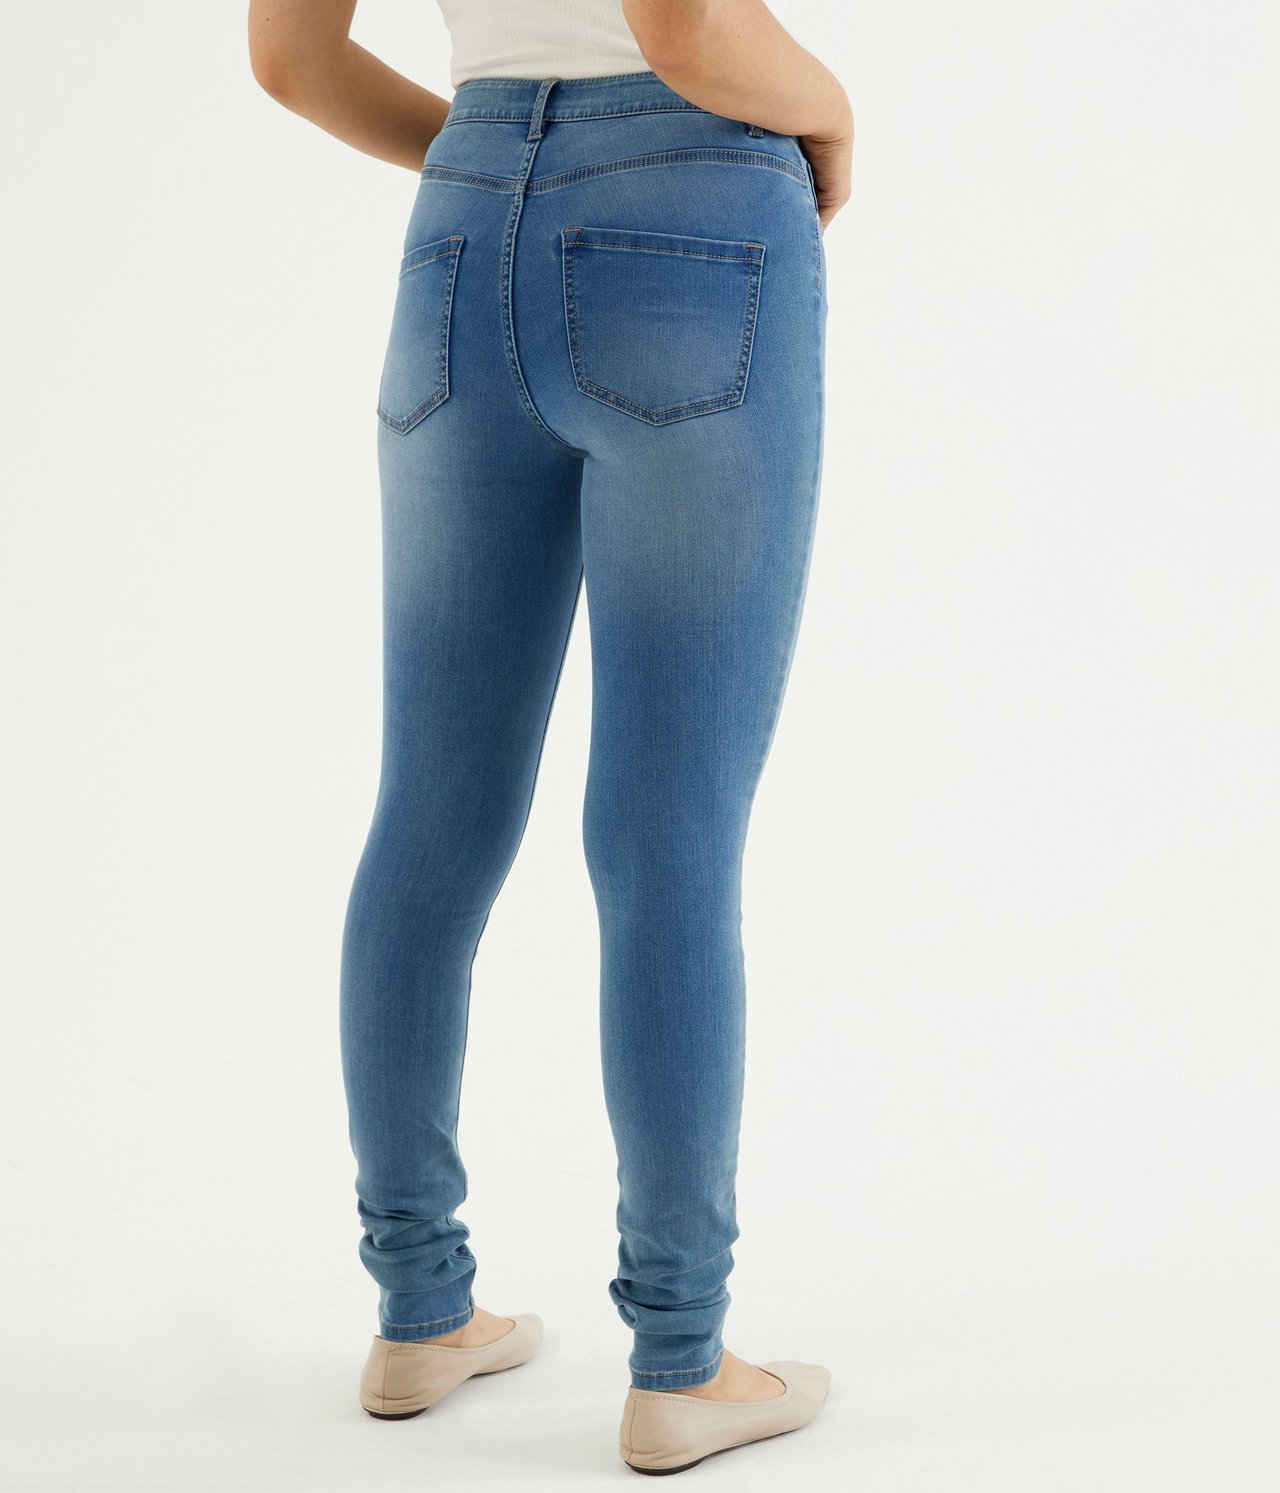 Super slim jeans extra long leg Denim - null - 0